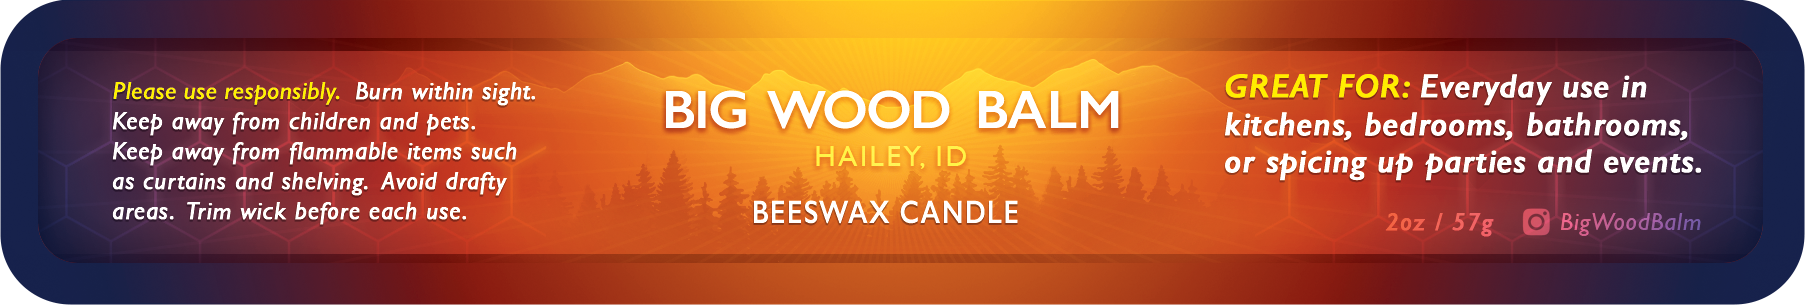 Big Wood Balm - Beeswax Candles